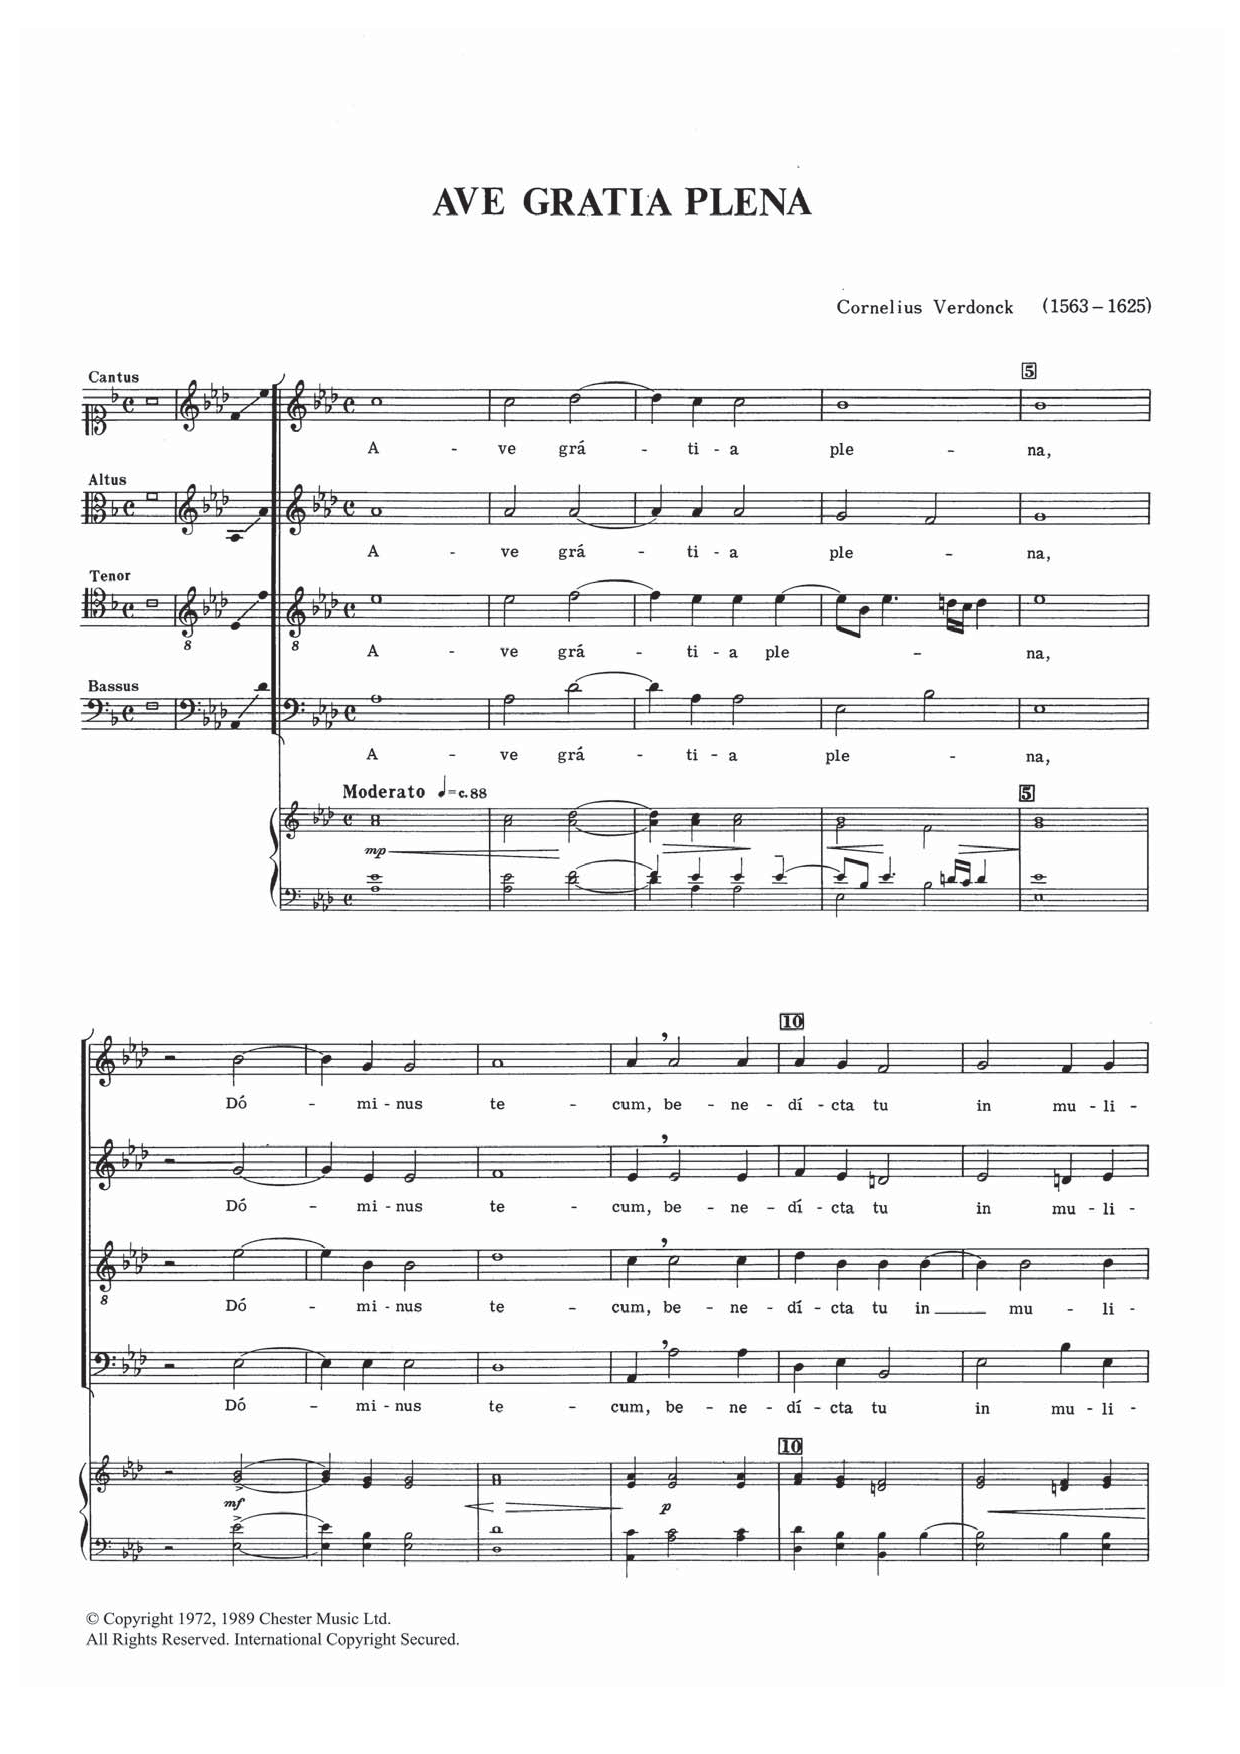 Cornelis Verdonck Ave Gratia Plena Sheet Music Notes & Chords for SATB - Download or Print PDF